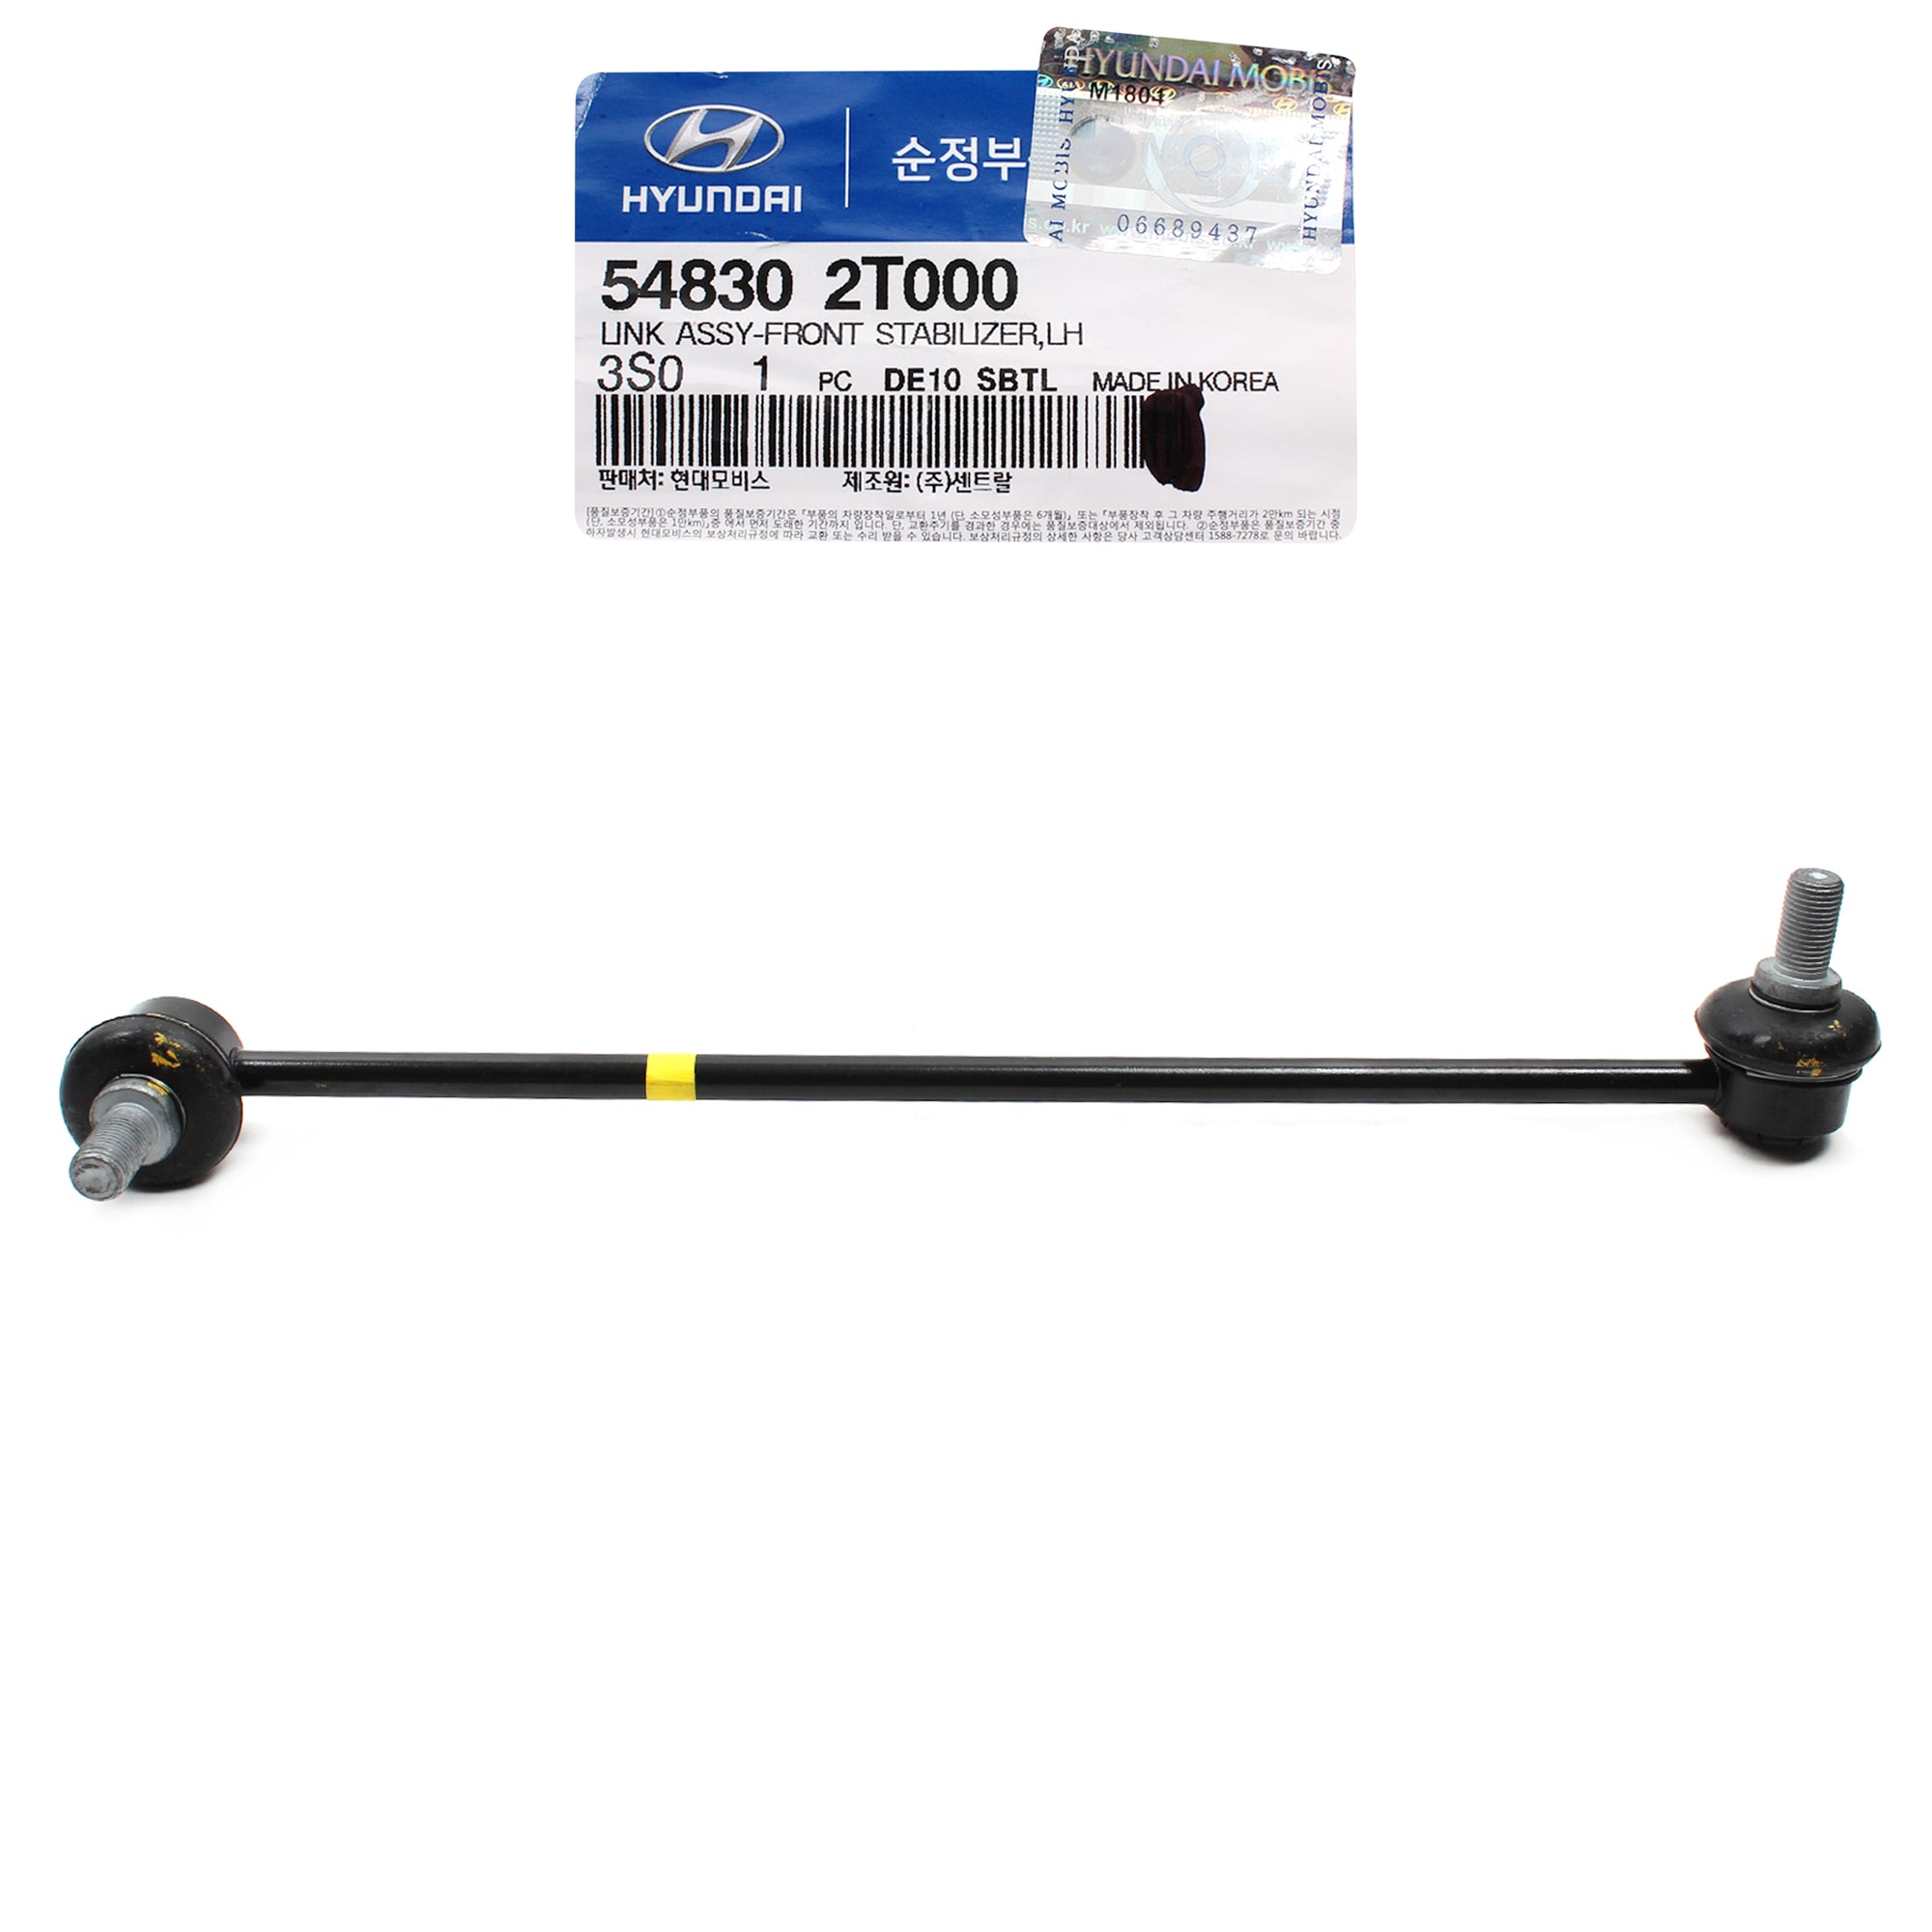 GENUINE Stabilizer Sway Bar FRONT LEFT for Hyundai Sonata Kia Optima 548302T000